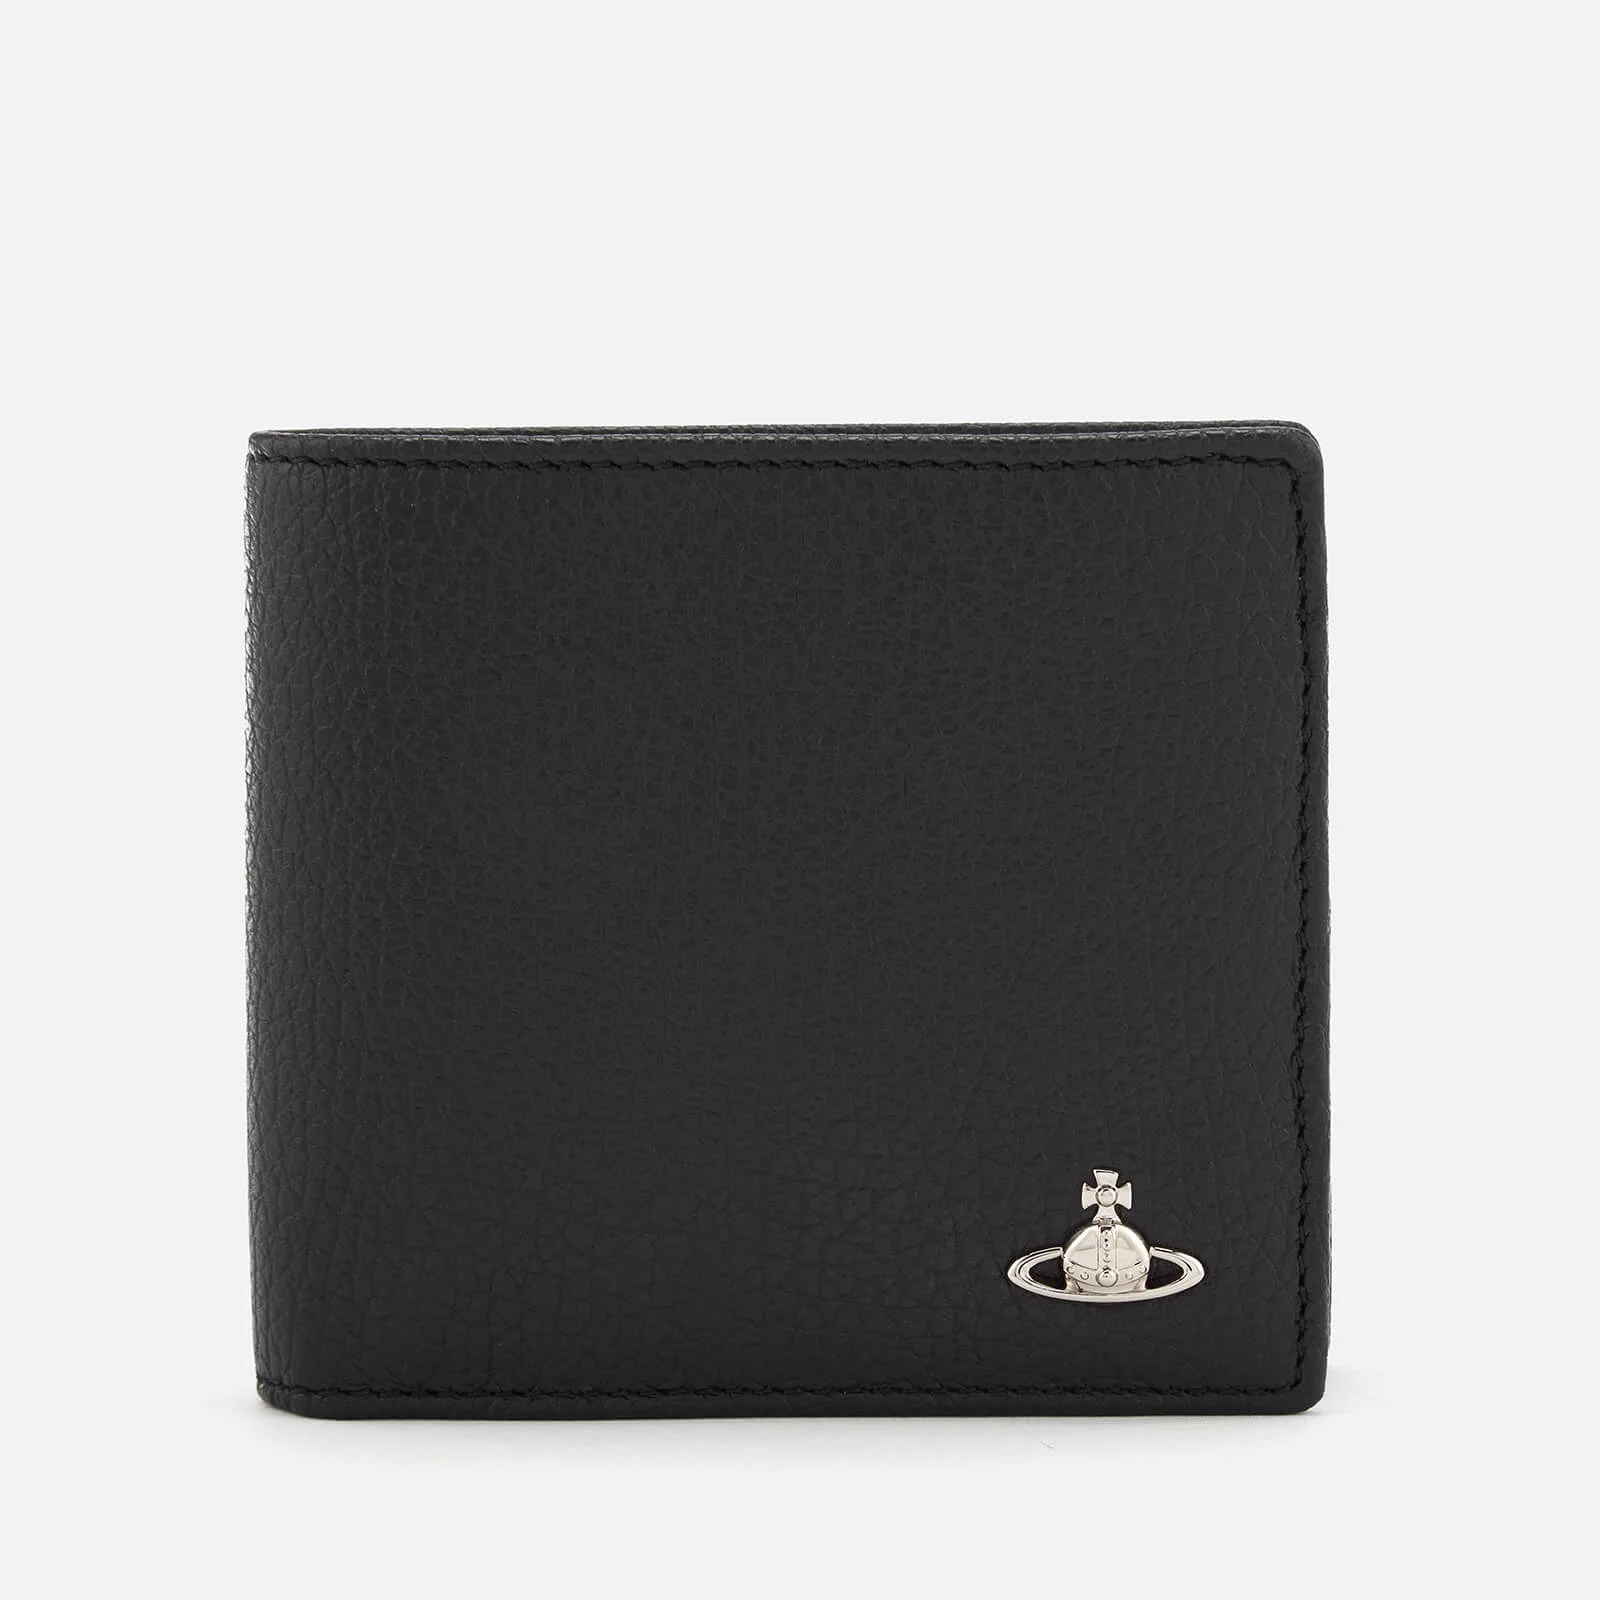 Vivienne Westwood Men's Milano Wallet - Black Image 1